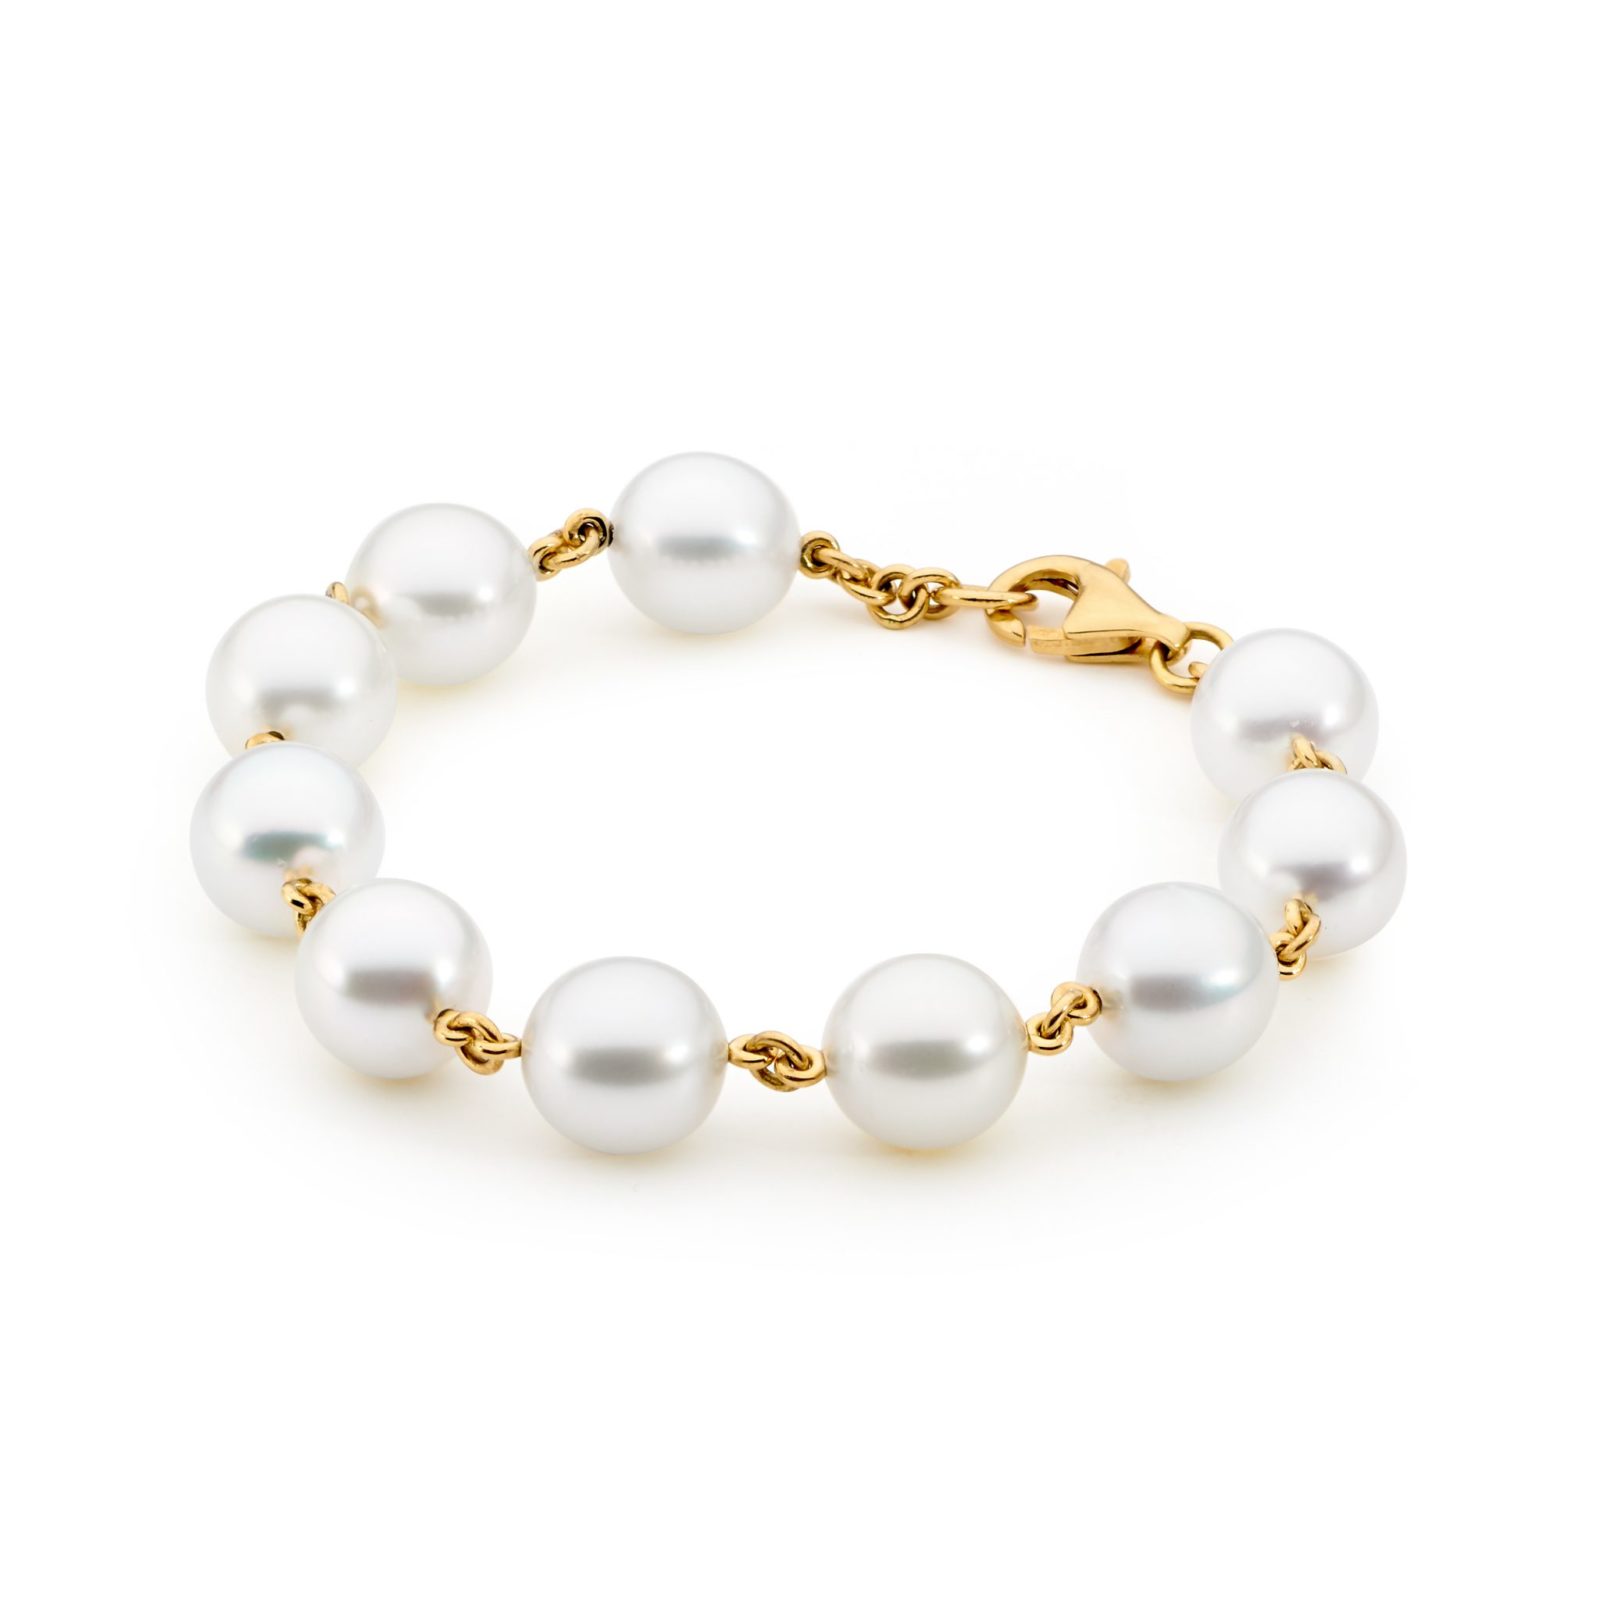 Gorgeous Champagne Pearl Bracelet - Artissimo